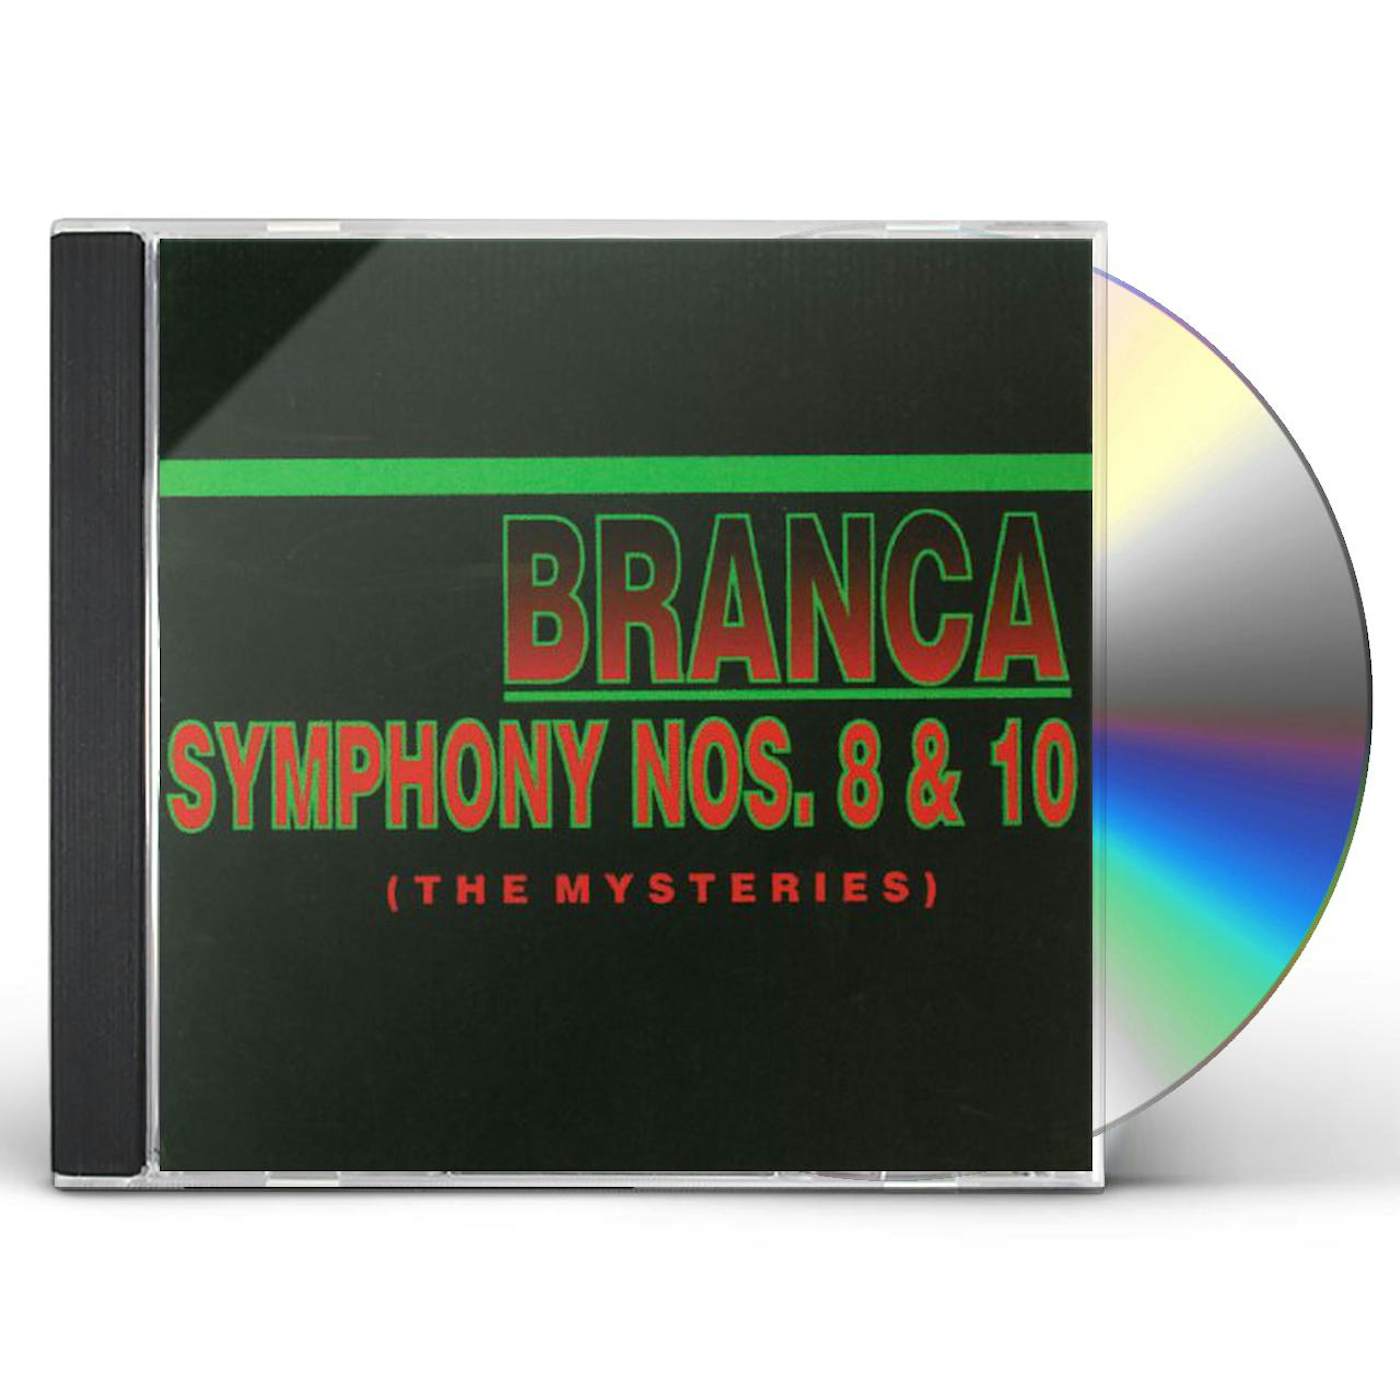 Glenn Branca SYMPHONIES 8 & 10 (THE MYSTERIES) CD